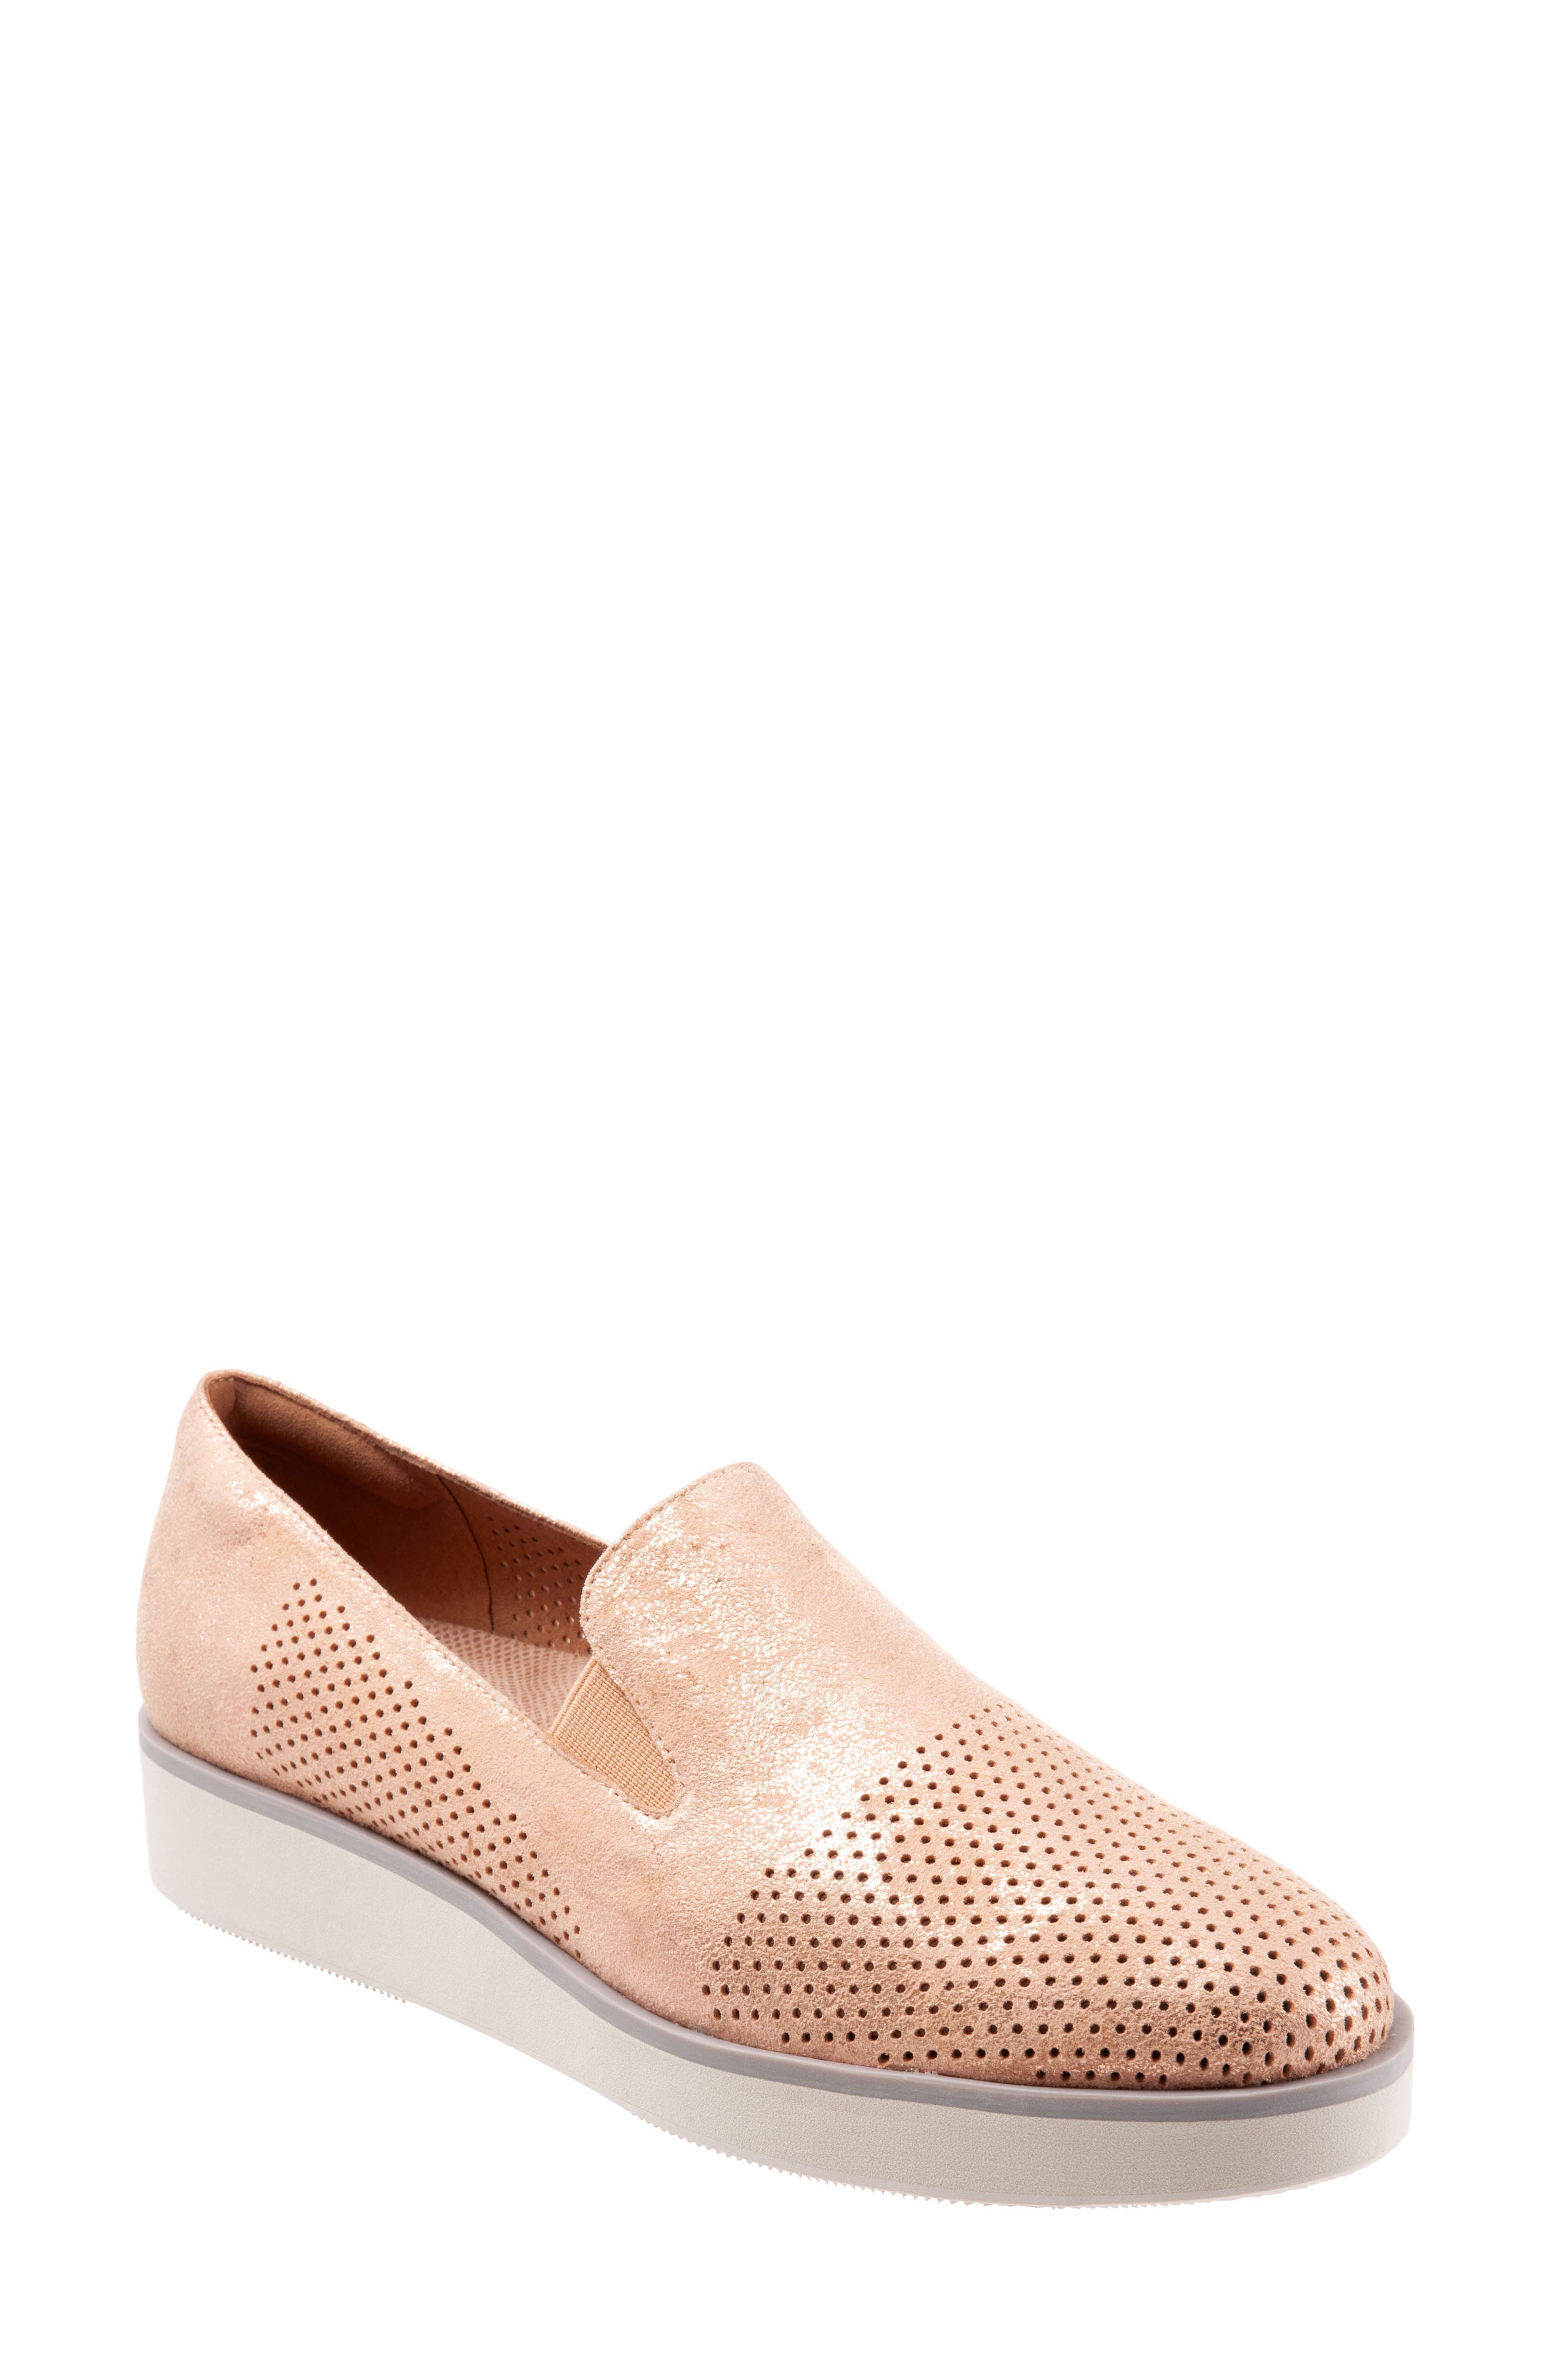 light pink flat shoes